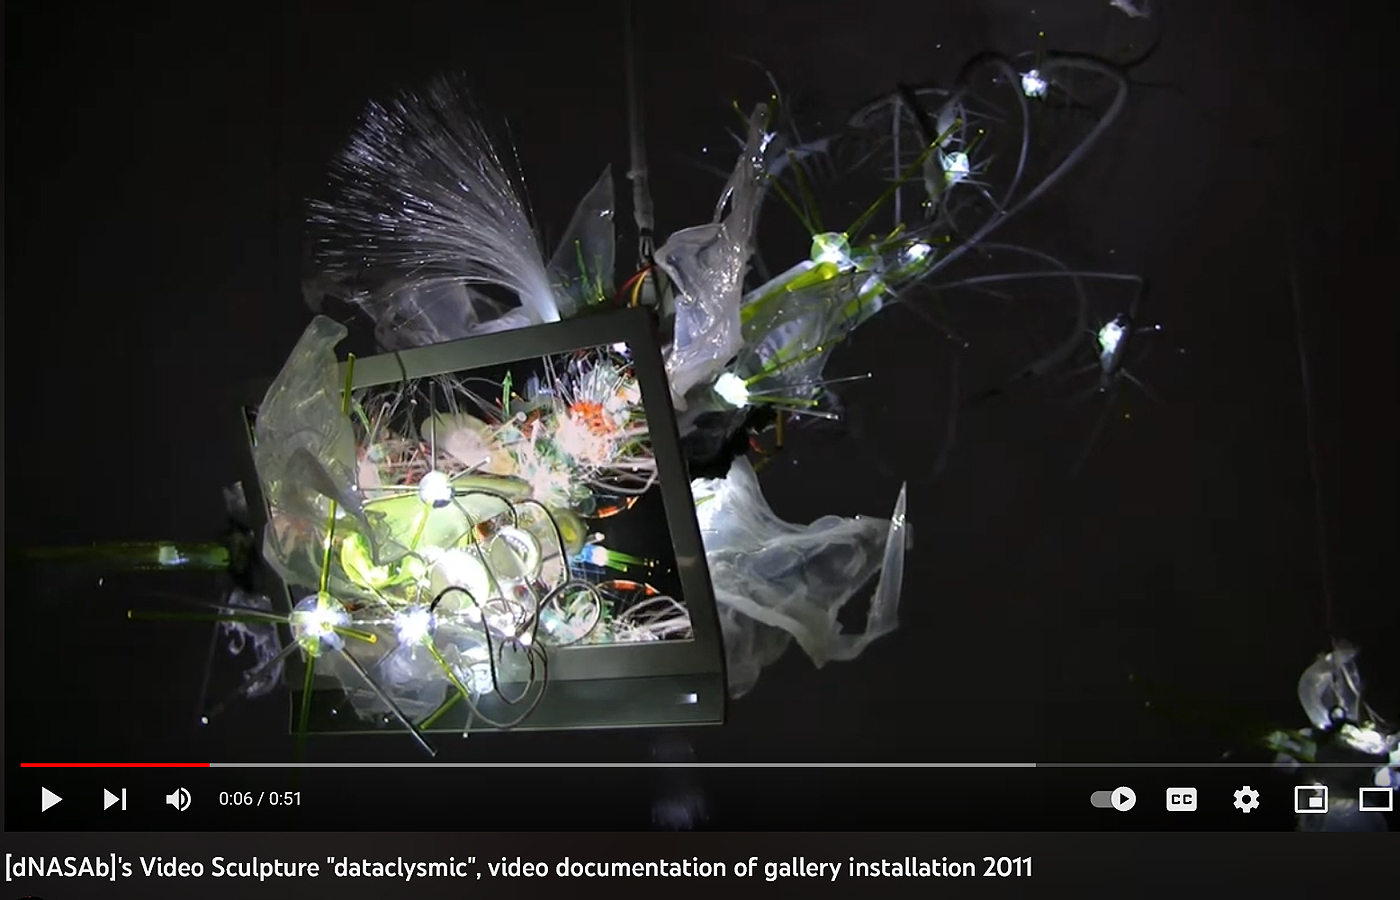 [dNASAb]'s Video Sculpture "dataclysmic", video documentation of gallery installation 2011